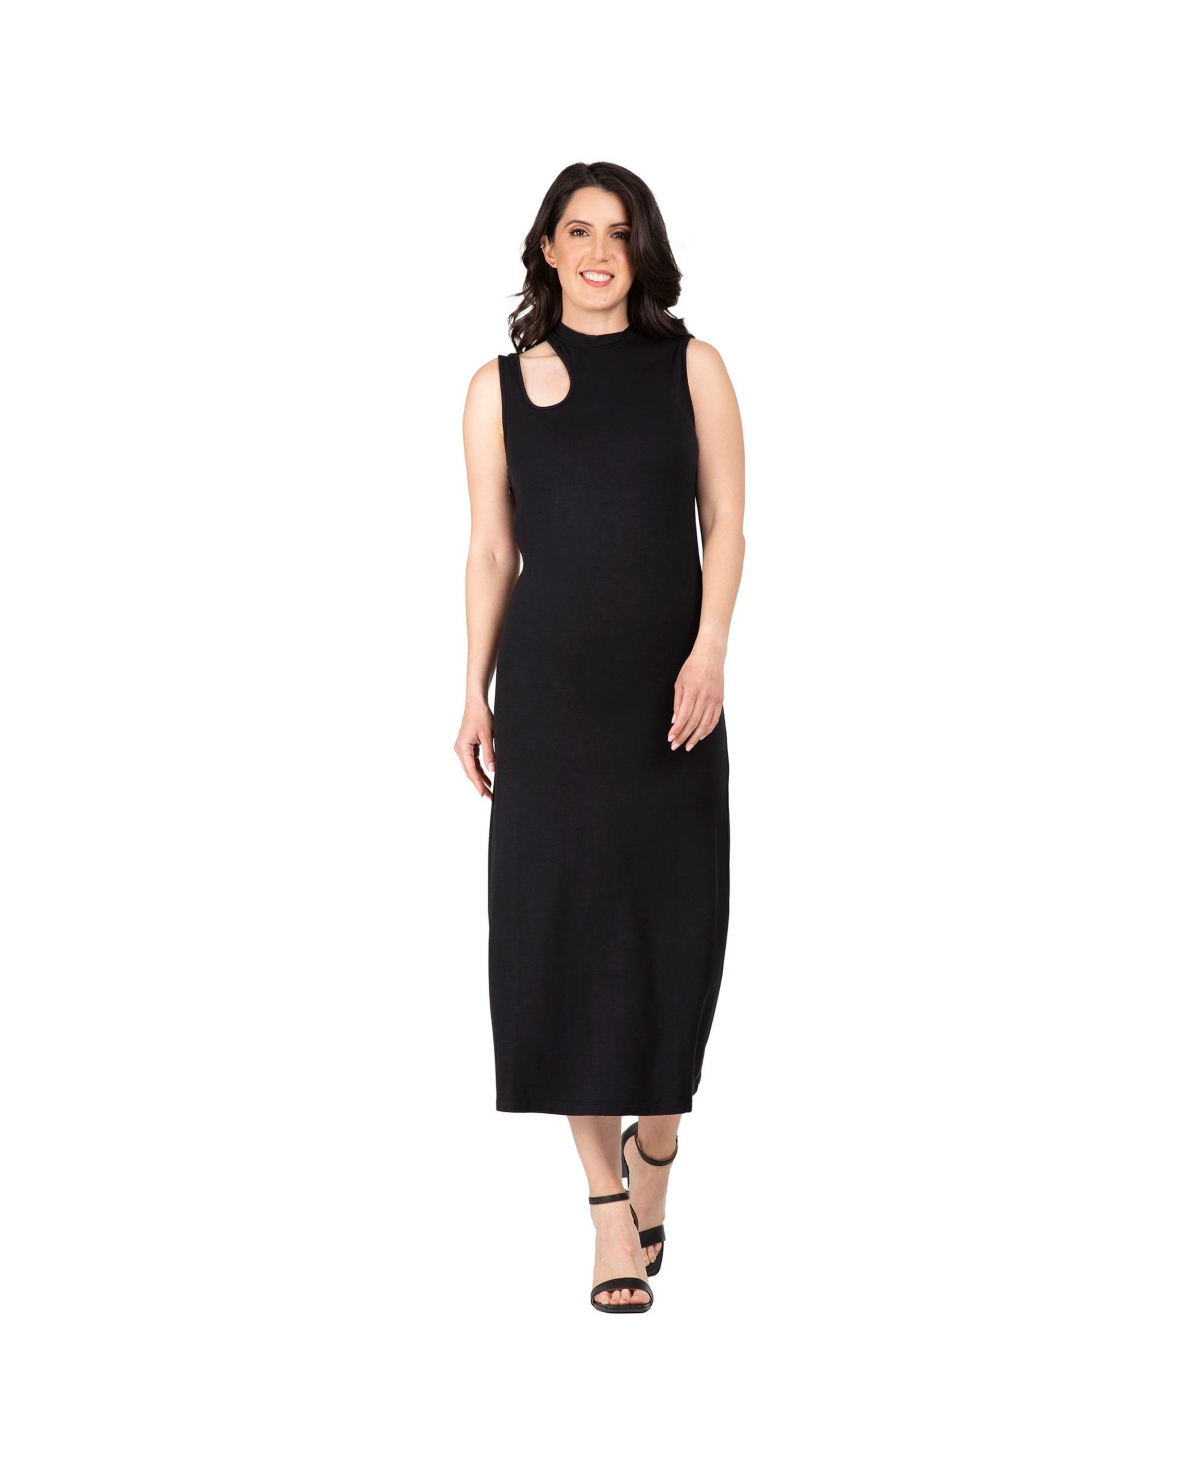 Women's Elegant Cut-Out Knit Jersey Tank Dress - Black